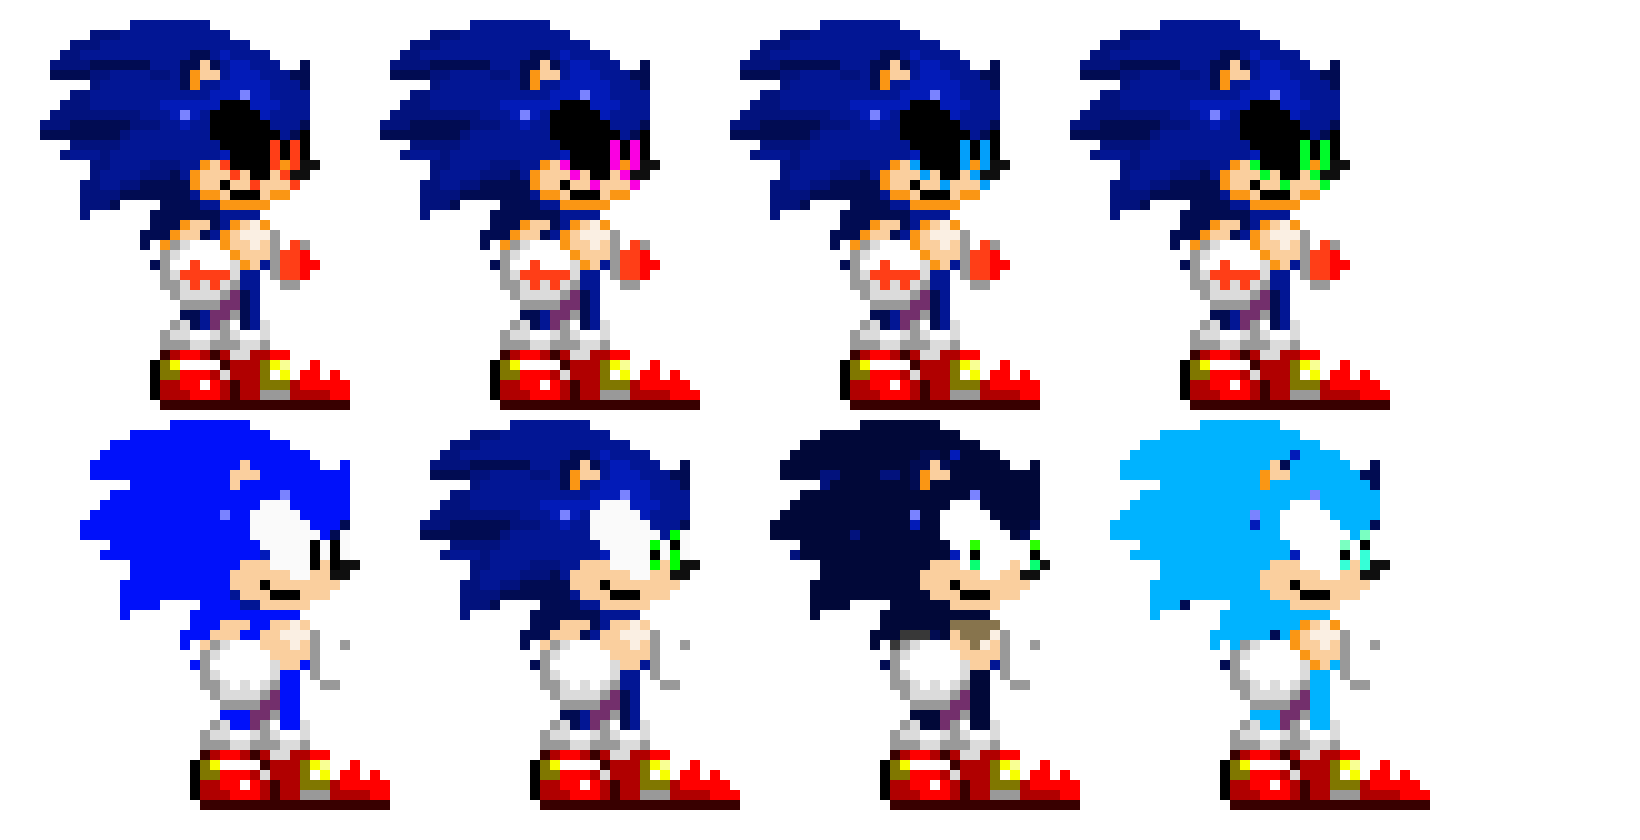 Sonic exe disaster 2d. Соник ехе пиксельный. Соник ехе в пикселях. Sonic exe пиксельный. Пиксельный Соник ехе с прозрачным фоном.